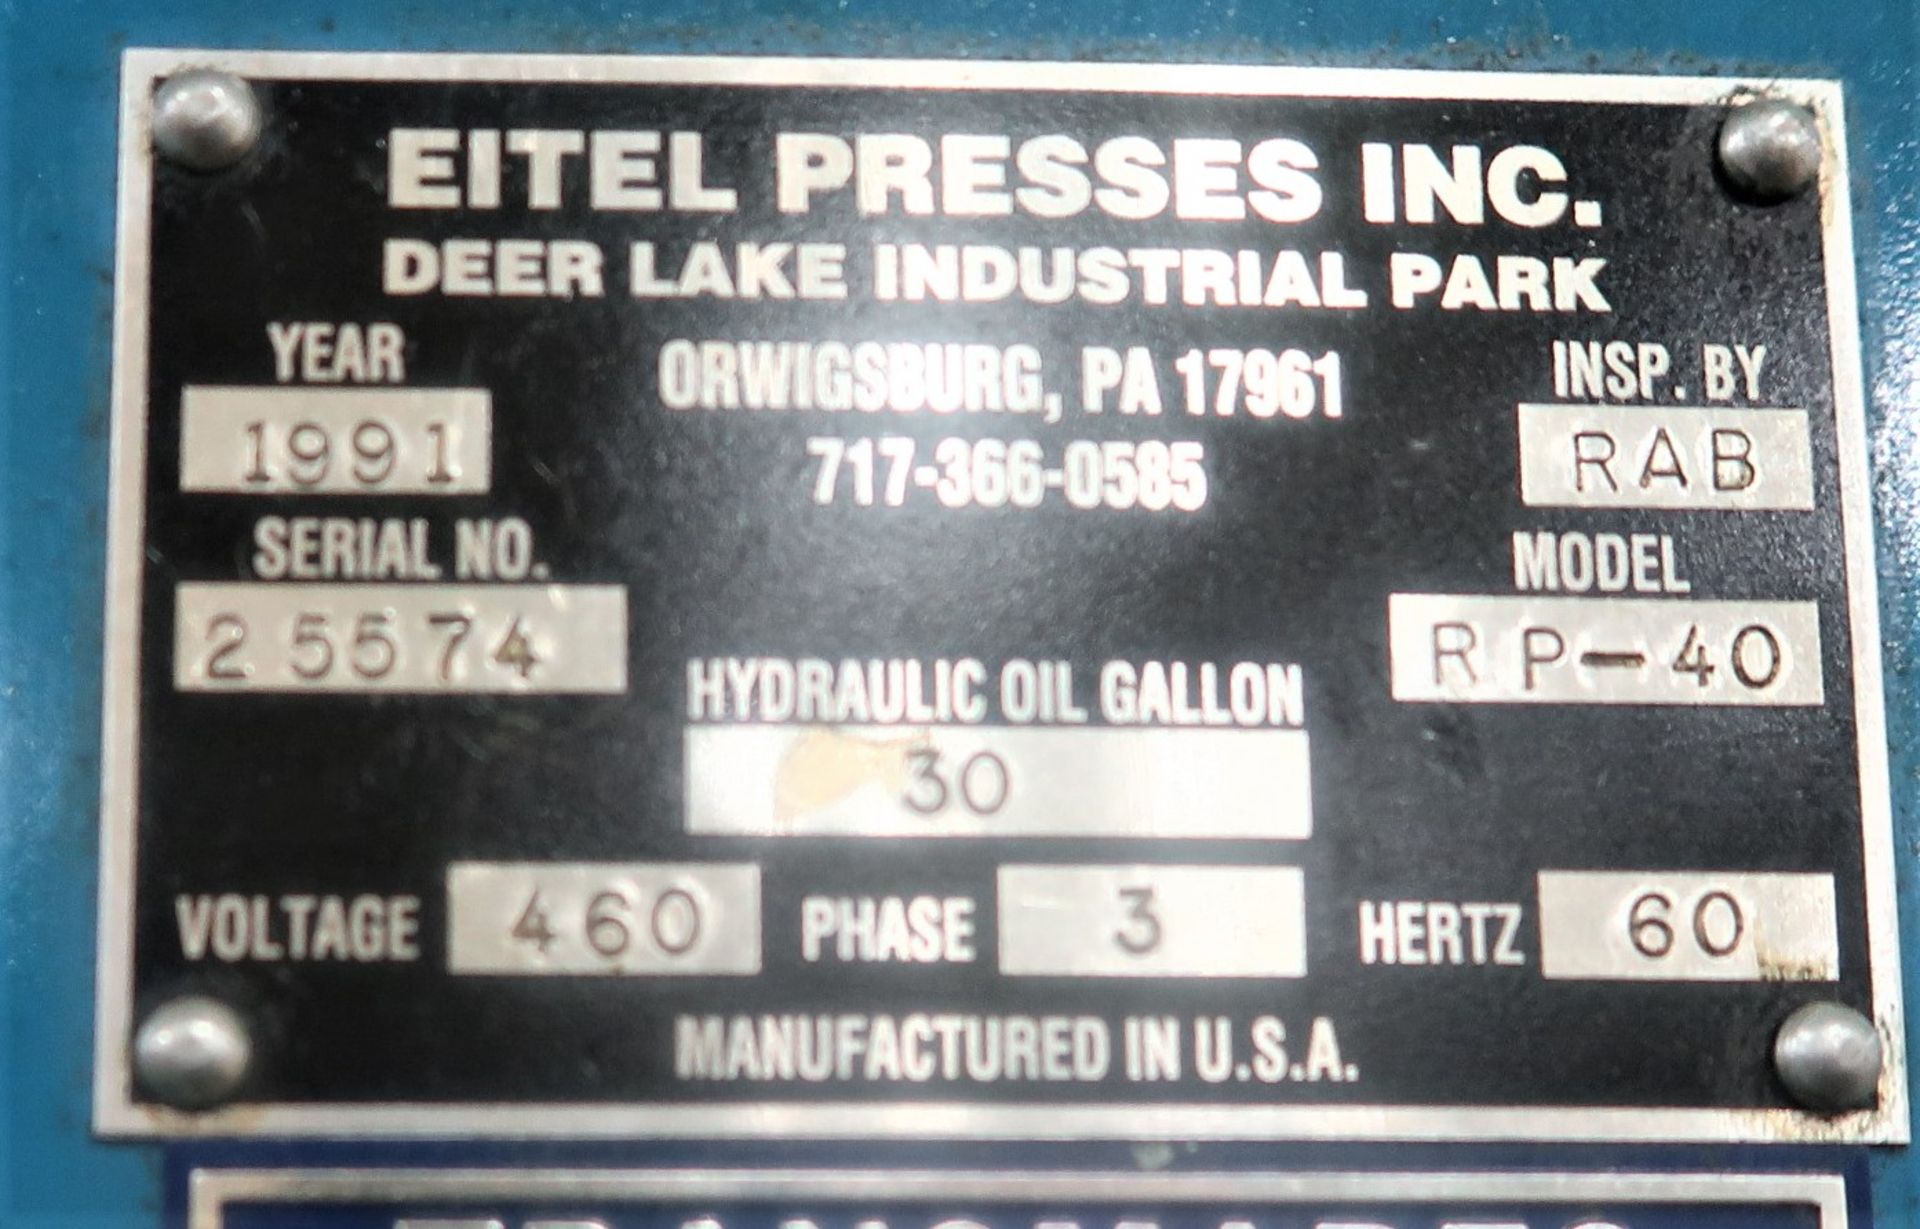 40 Ton Eitel Model RP-40 Precision Hydraulic Straightening Press, S/N 25574 - Image 5 of 6